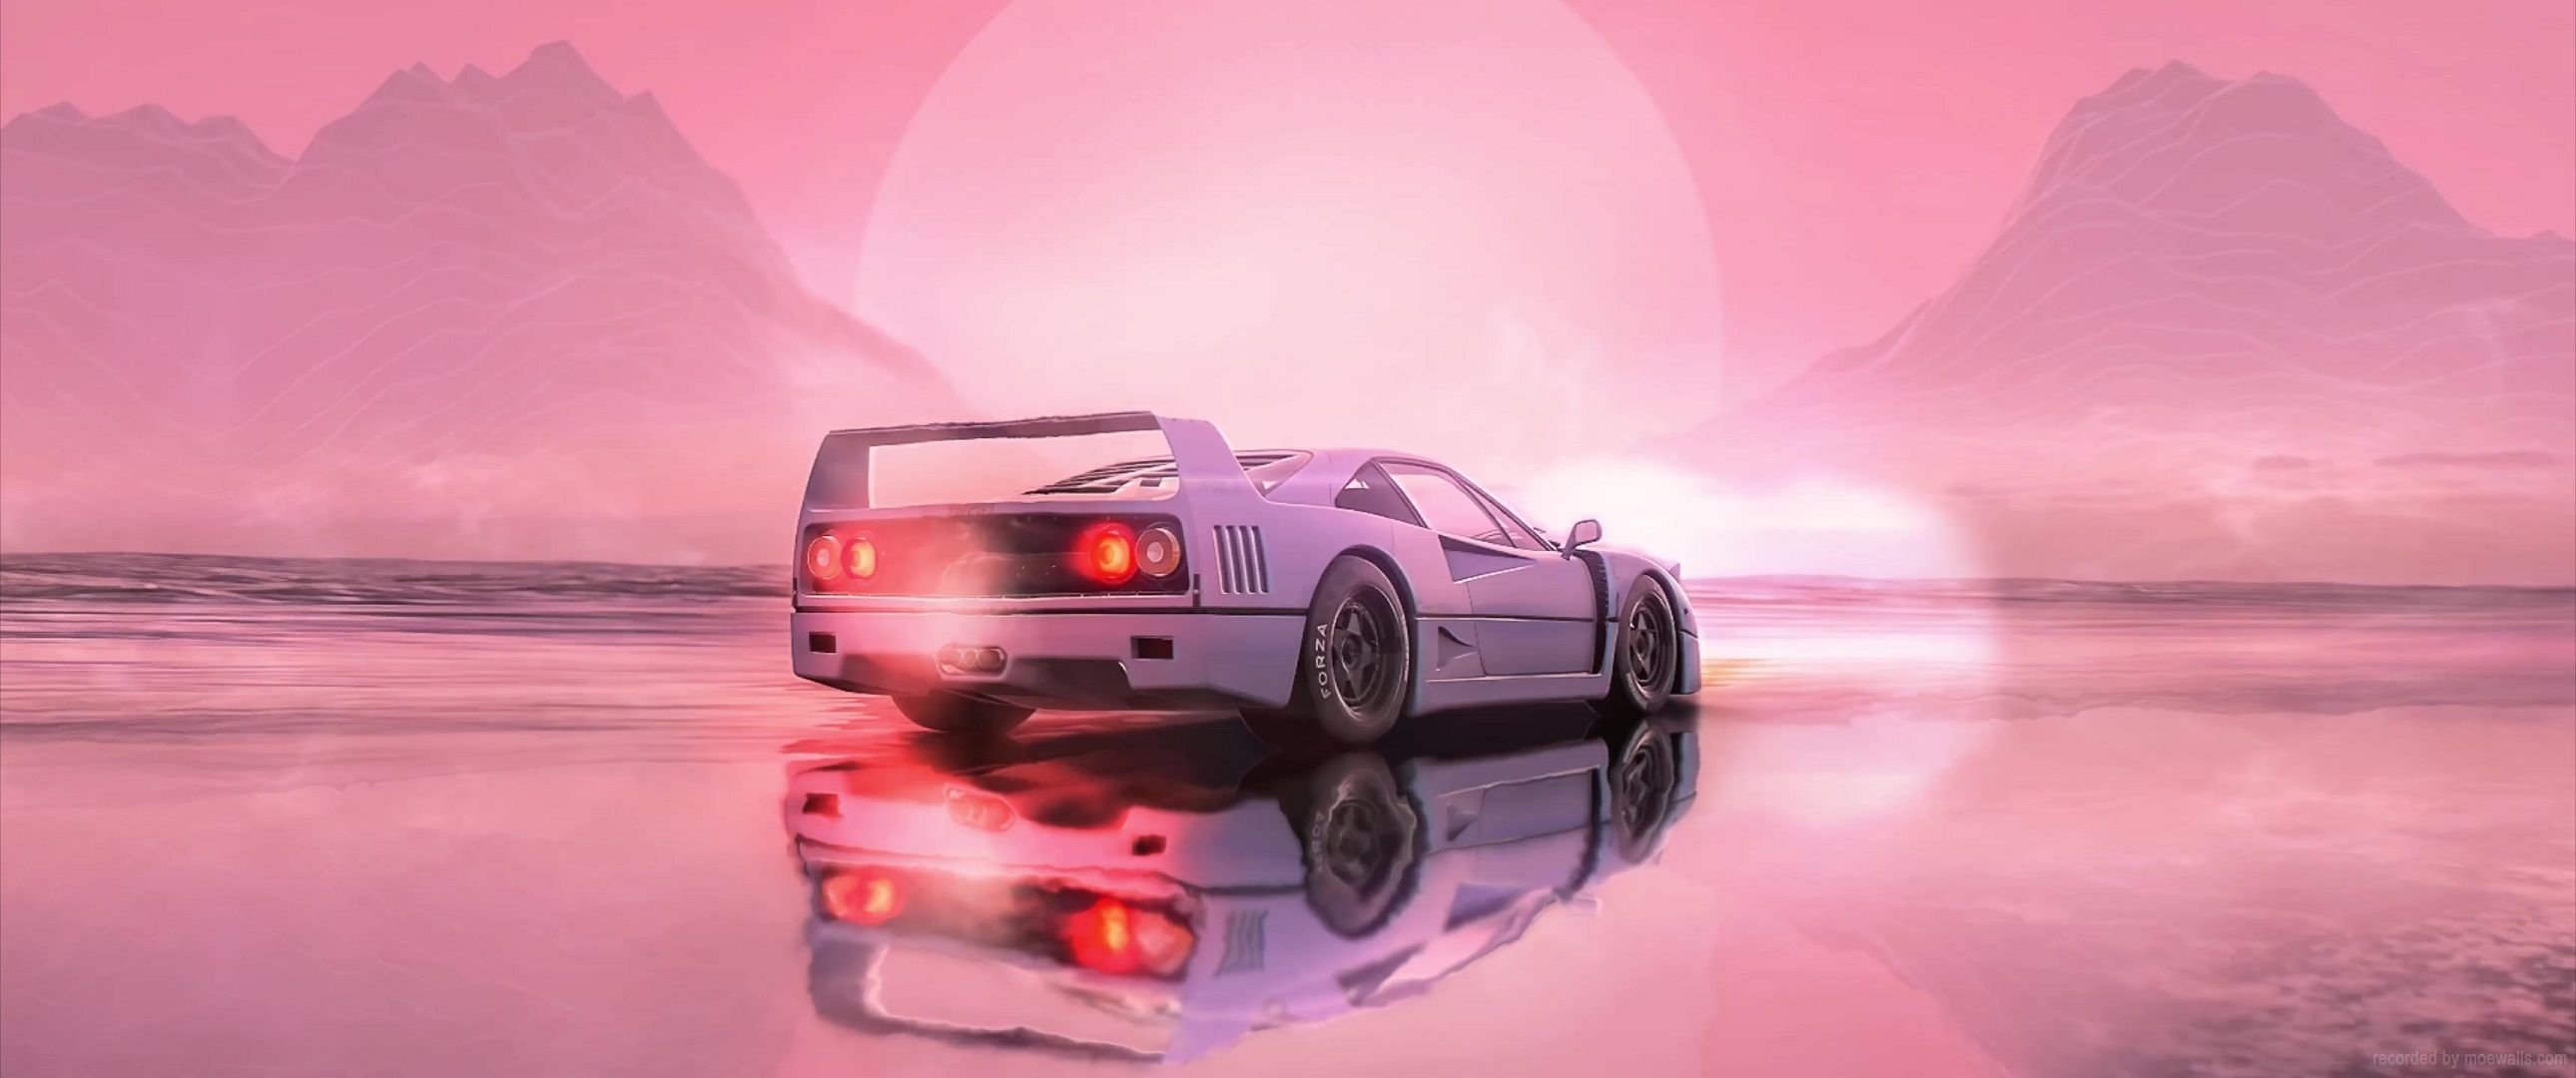 Ferrari Hintergrundbild 2580x1080. Ferrari F40 Forza Horizon 4 Live Wallpaper